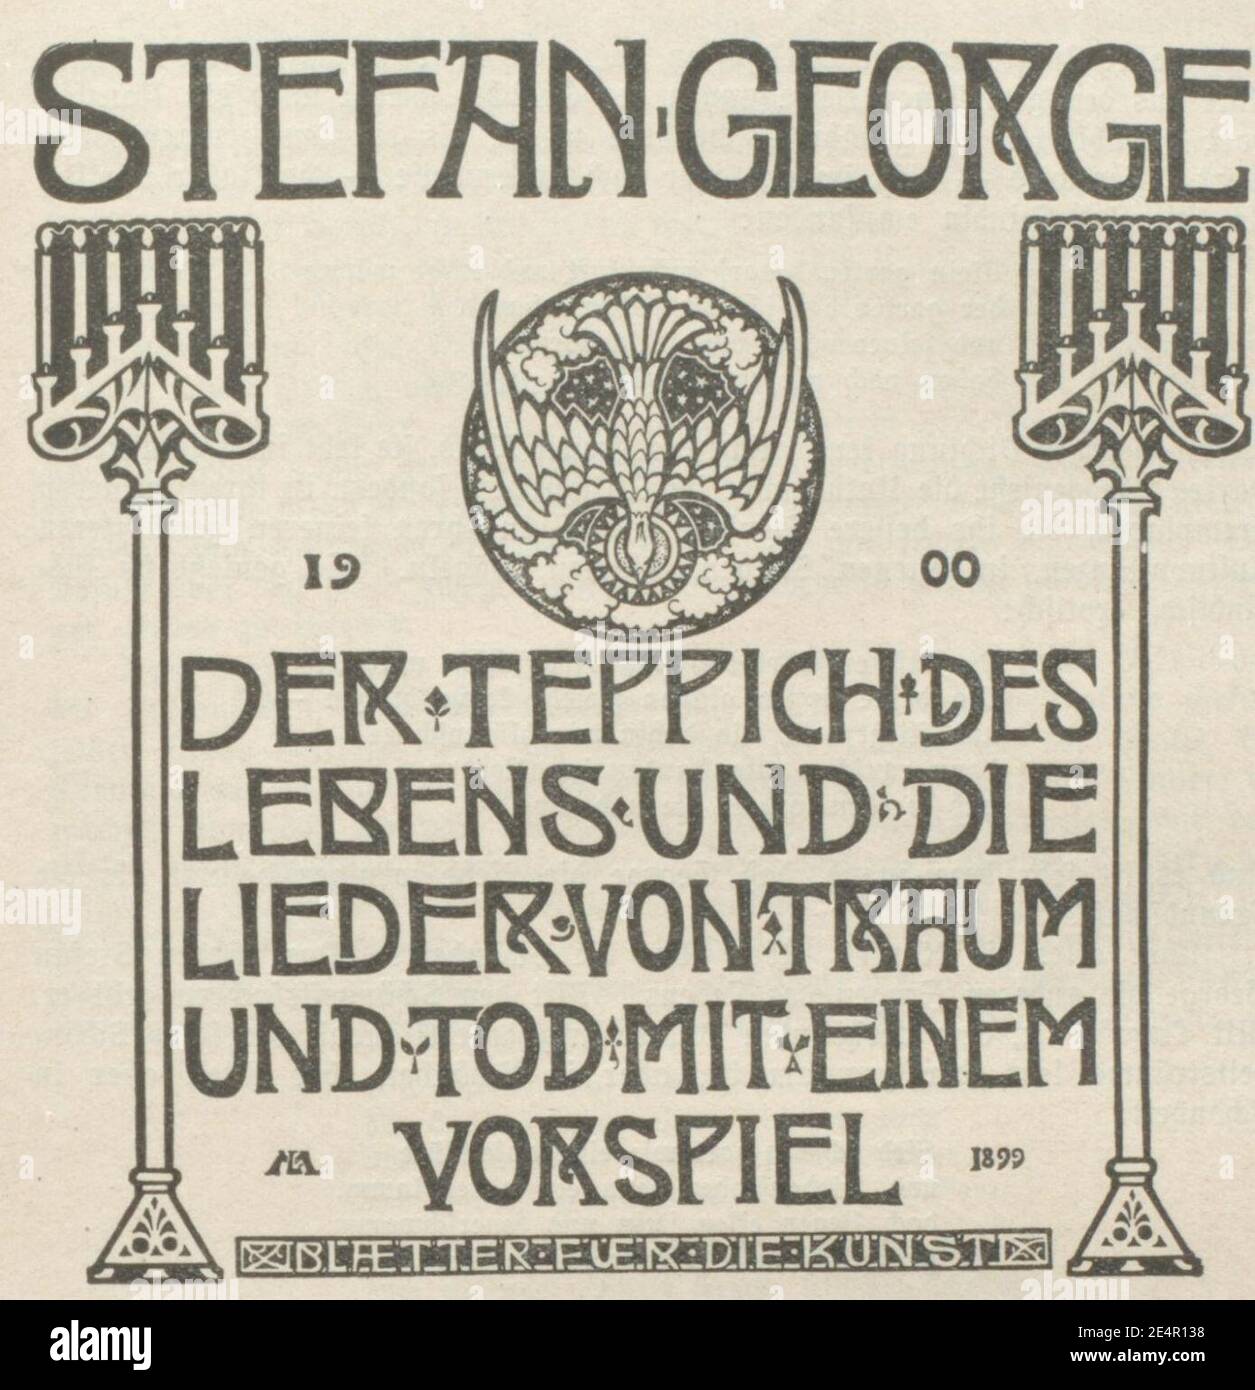 Melchior Lechter Stefan George der Teppich des Lebens 1899 Stockfotografie  - Alamy